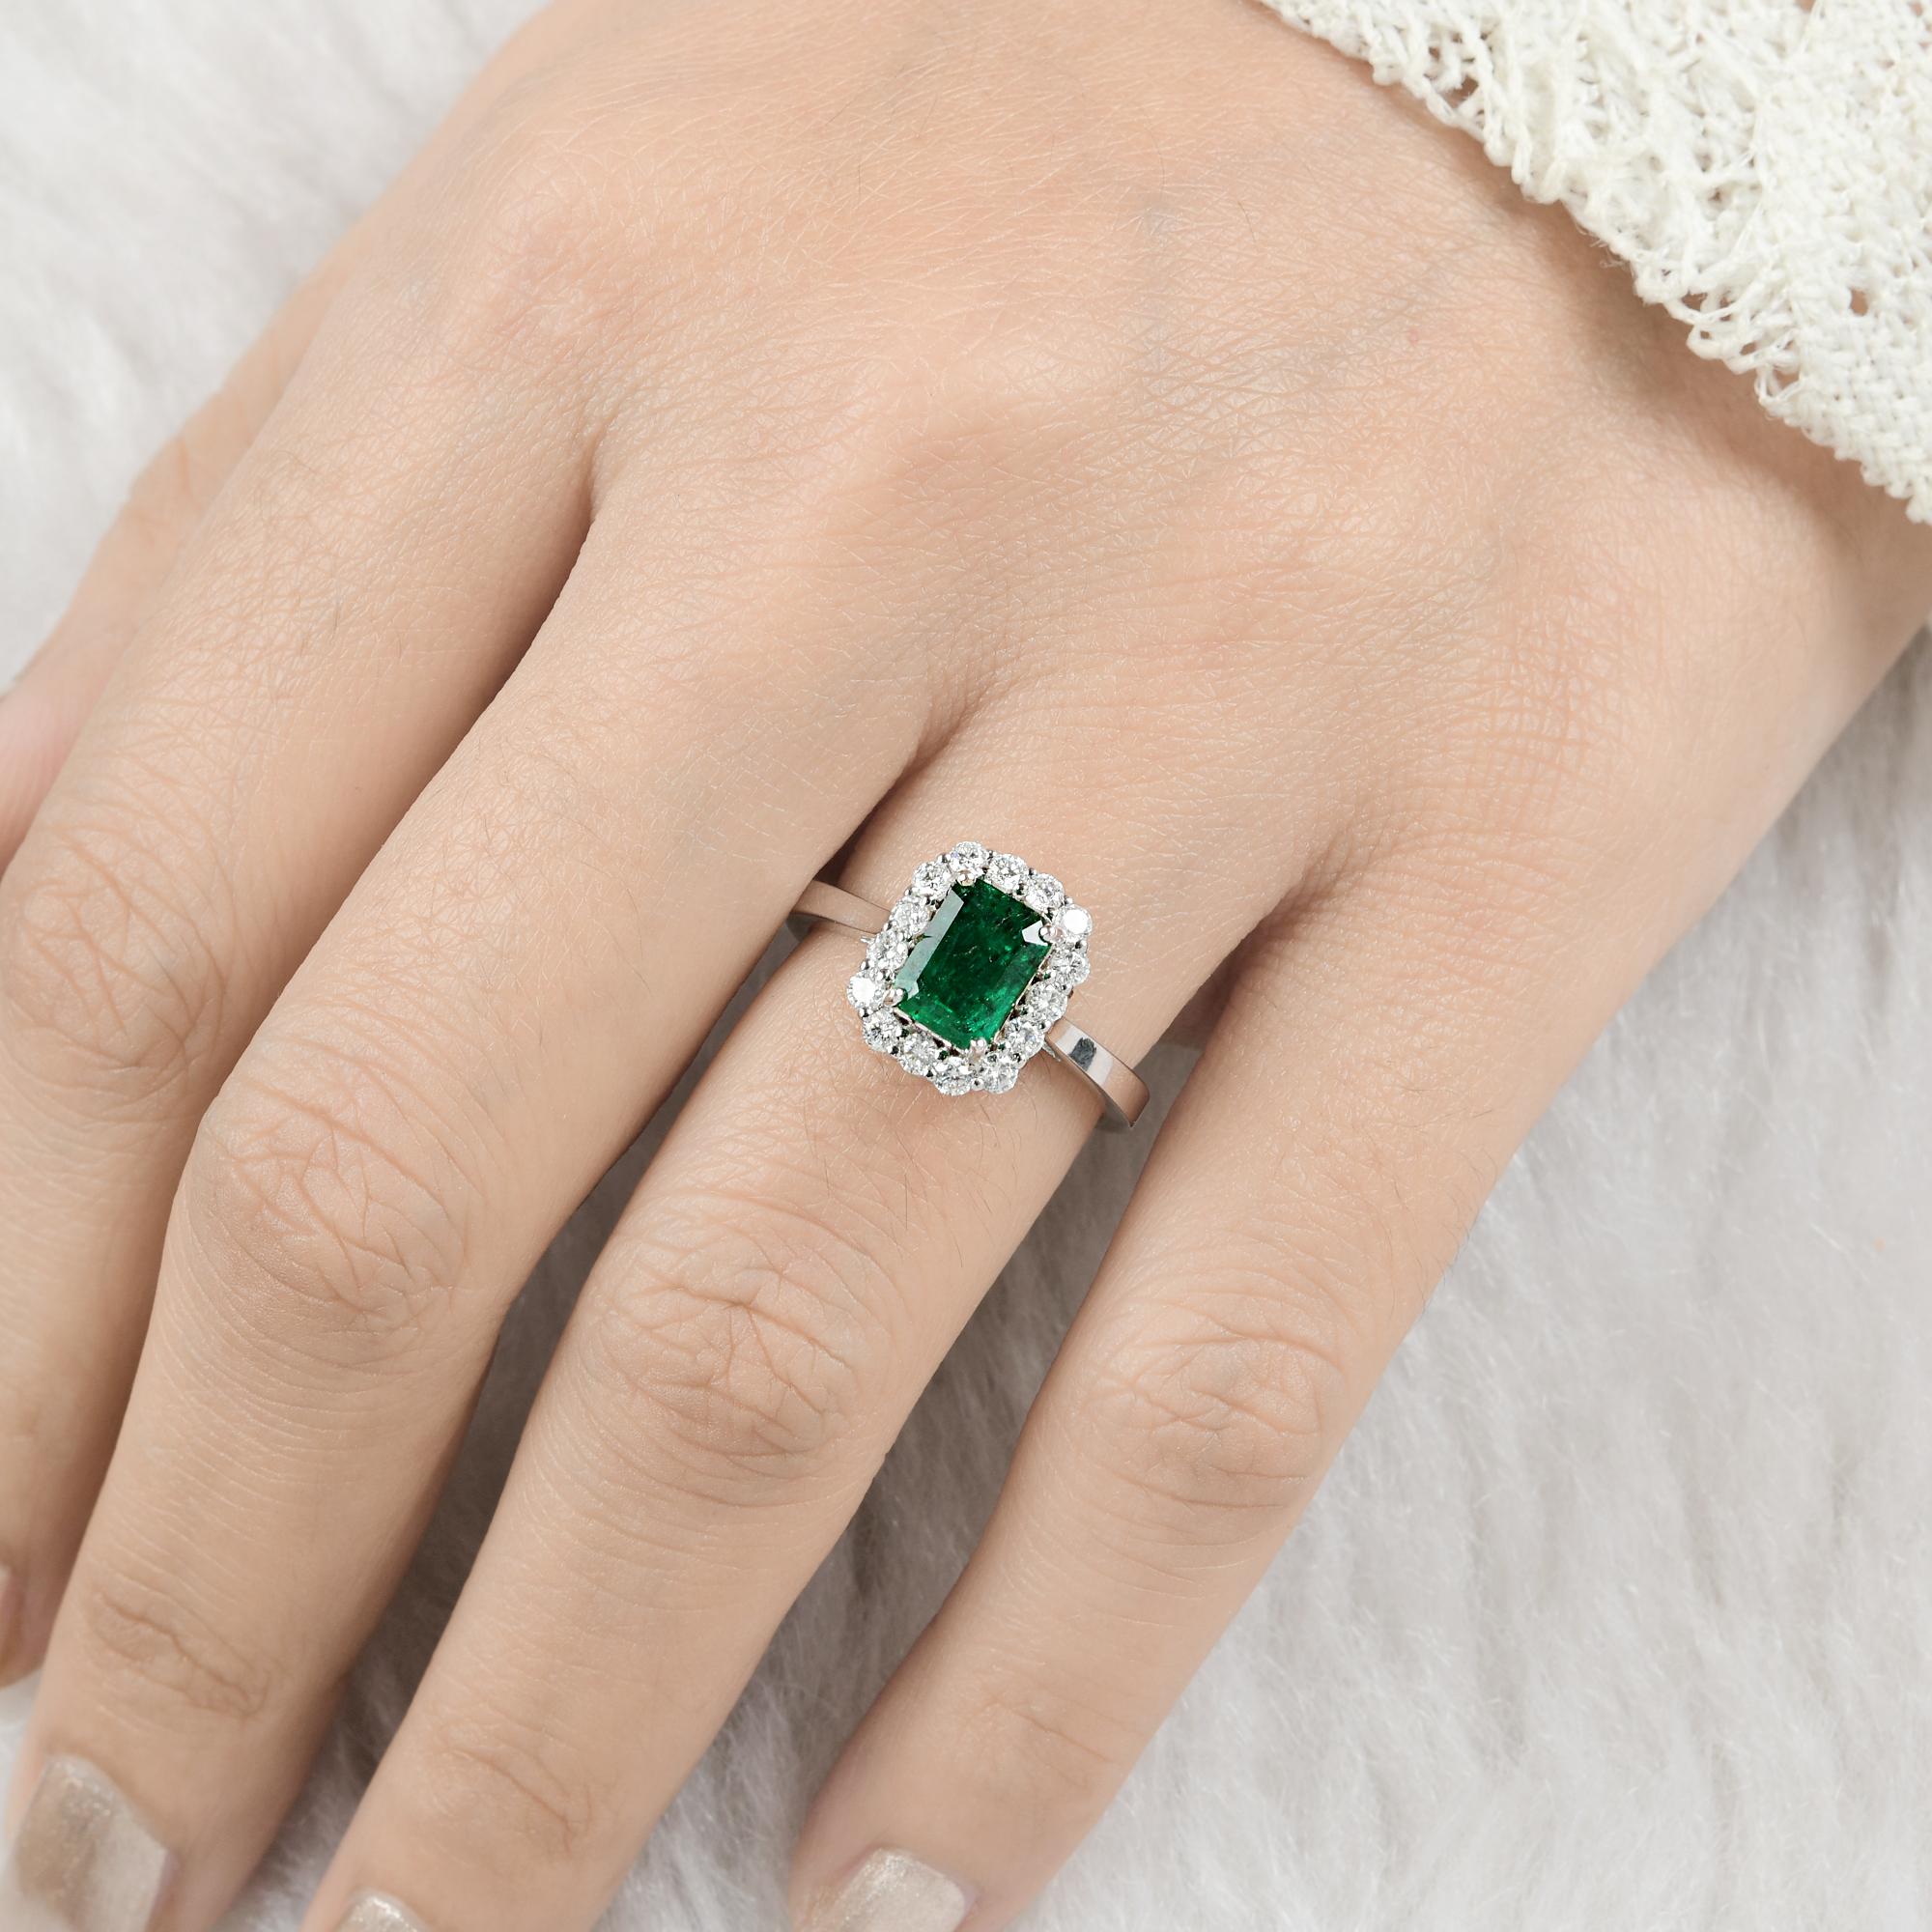 Emerald Cut Emerald Gemstone Cocktail Ring Diamond 18 Karat White Gold Handmade Fine Jewelry For Sale